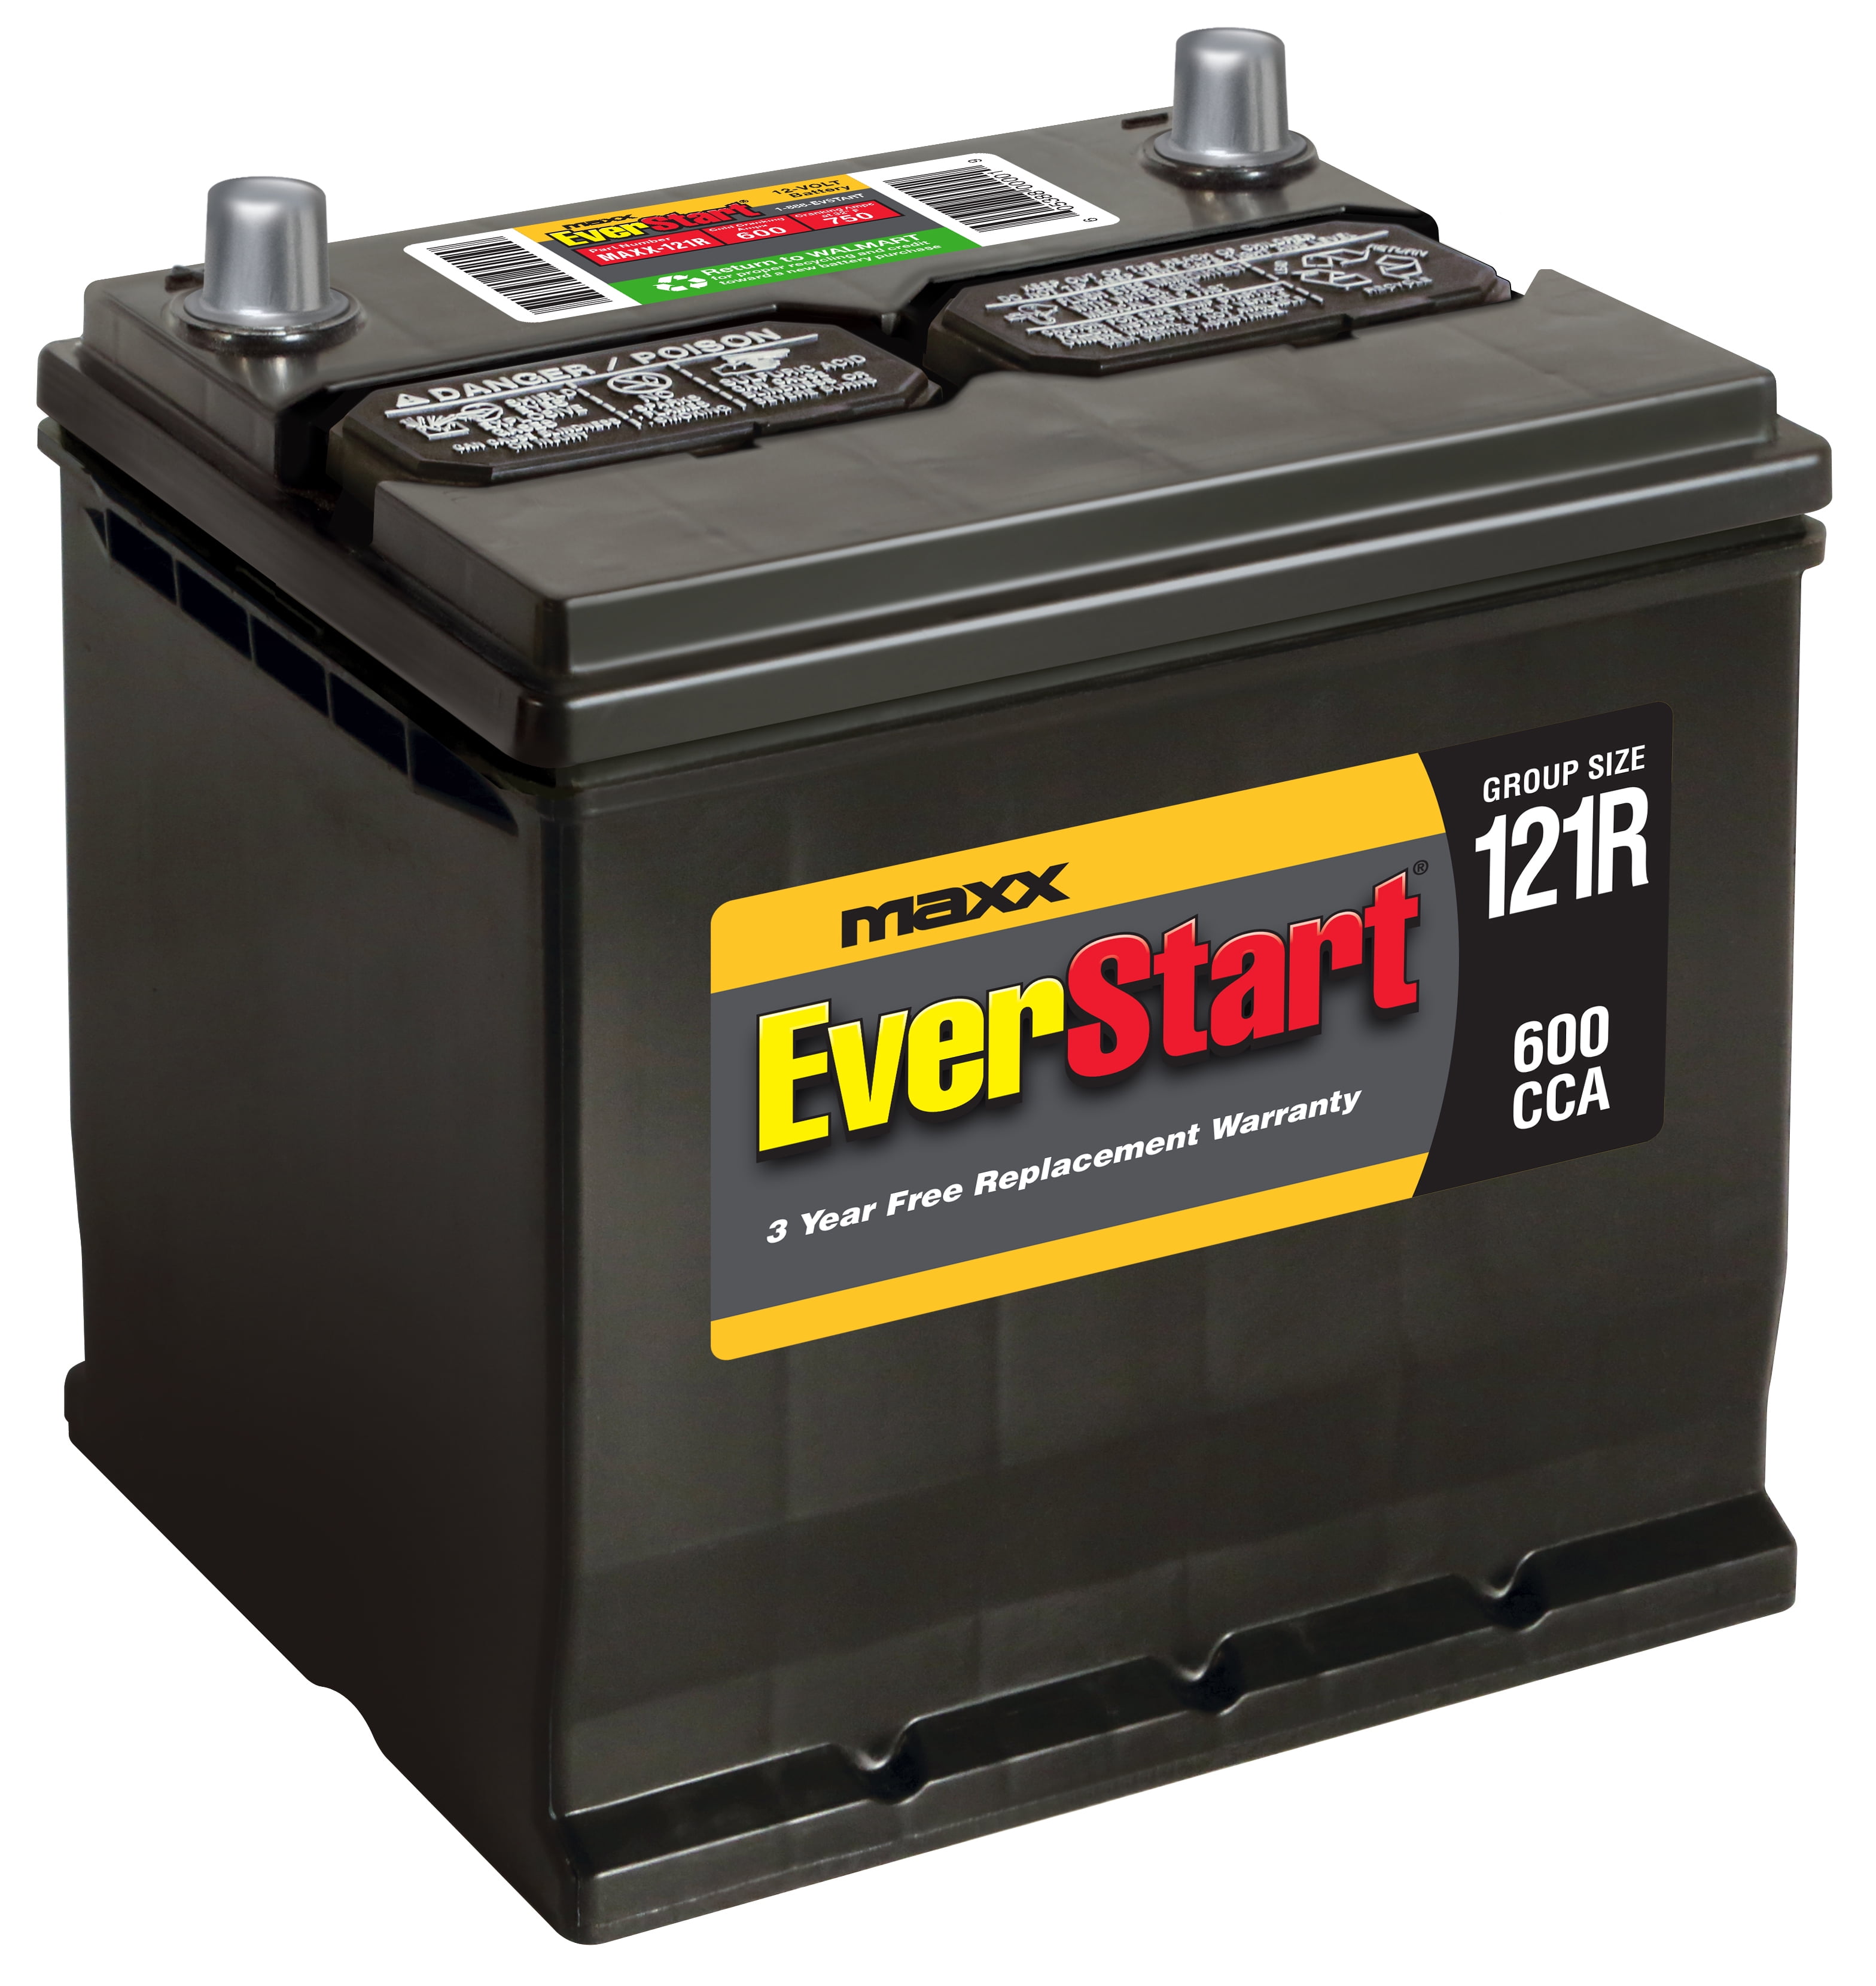 Everstart Maxx Lead Acid Automotive Battery Group Size 121r 12 Volt 600 Cca Walmart Com